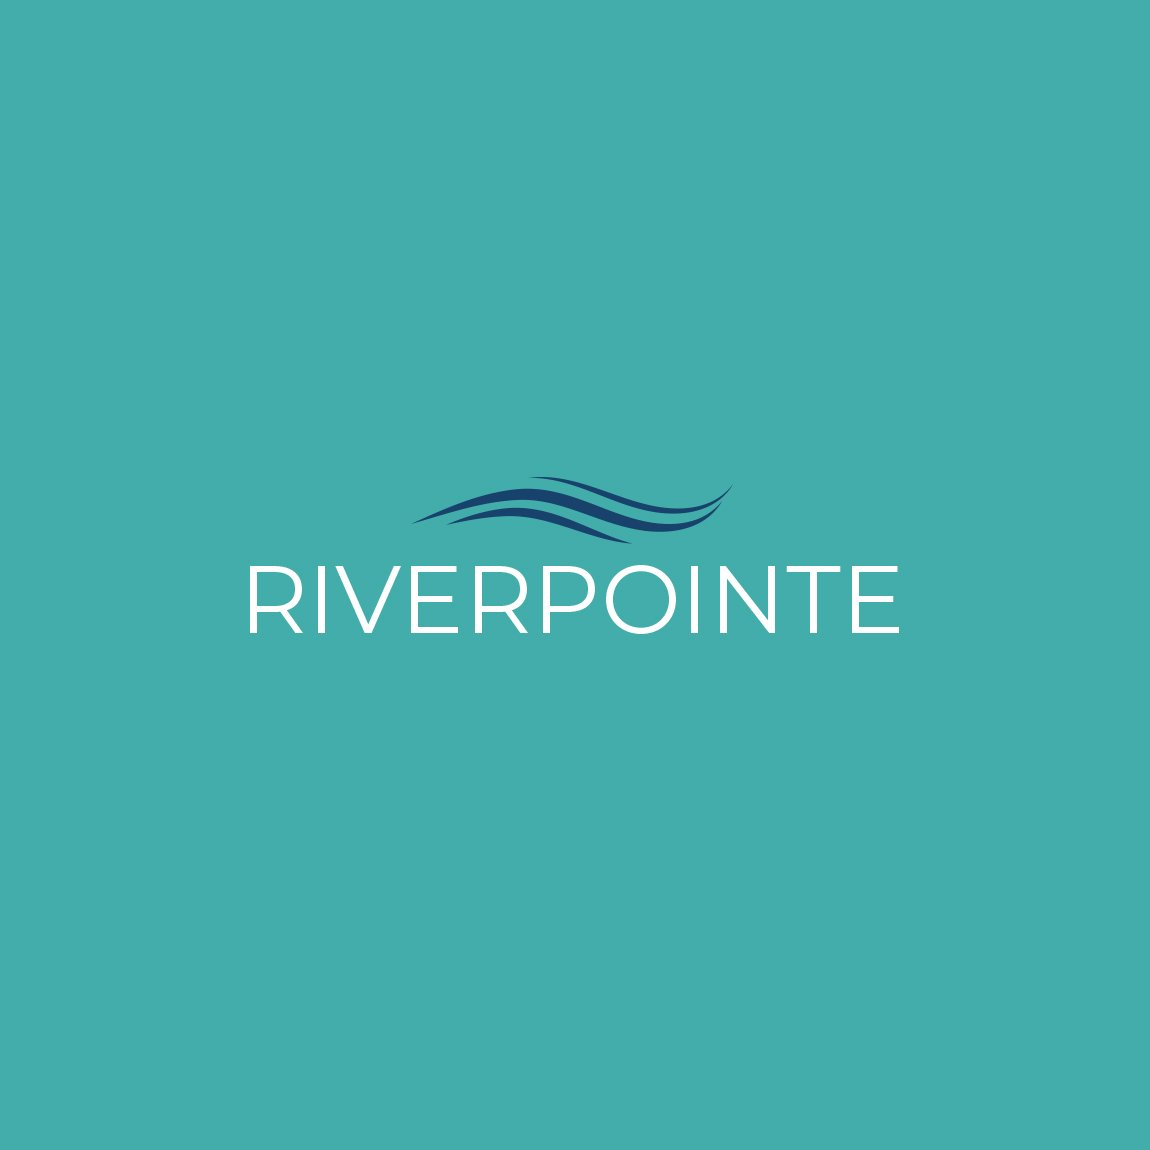 Riverpointe 02.jpg